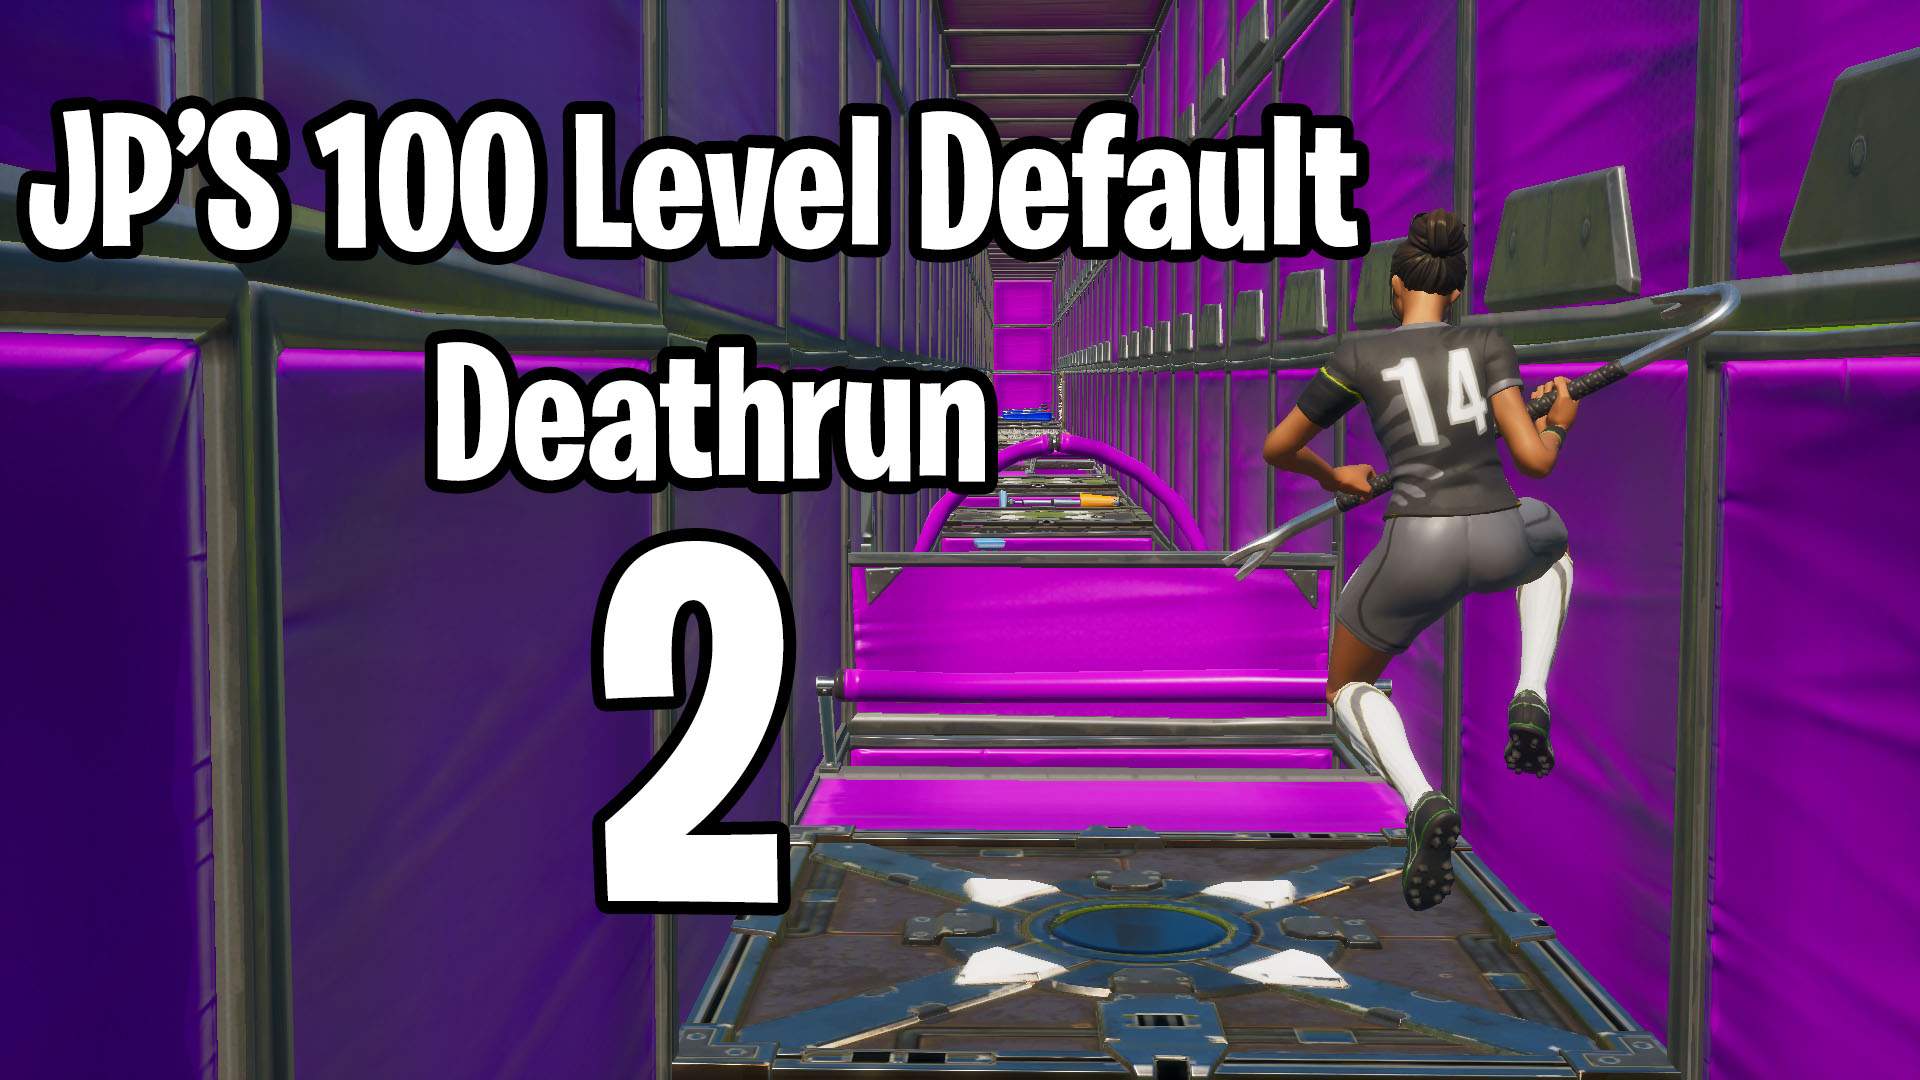 JP'S 100 LEVEL DEFAULT DEATHRUN 2 - Fortnite Creative Map Codes - Drop...